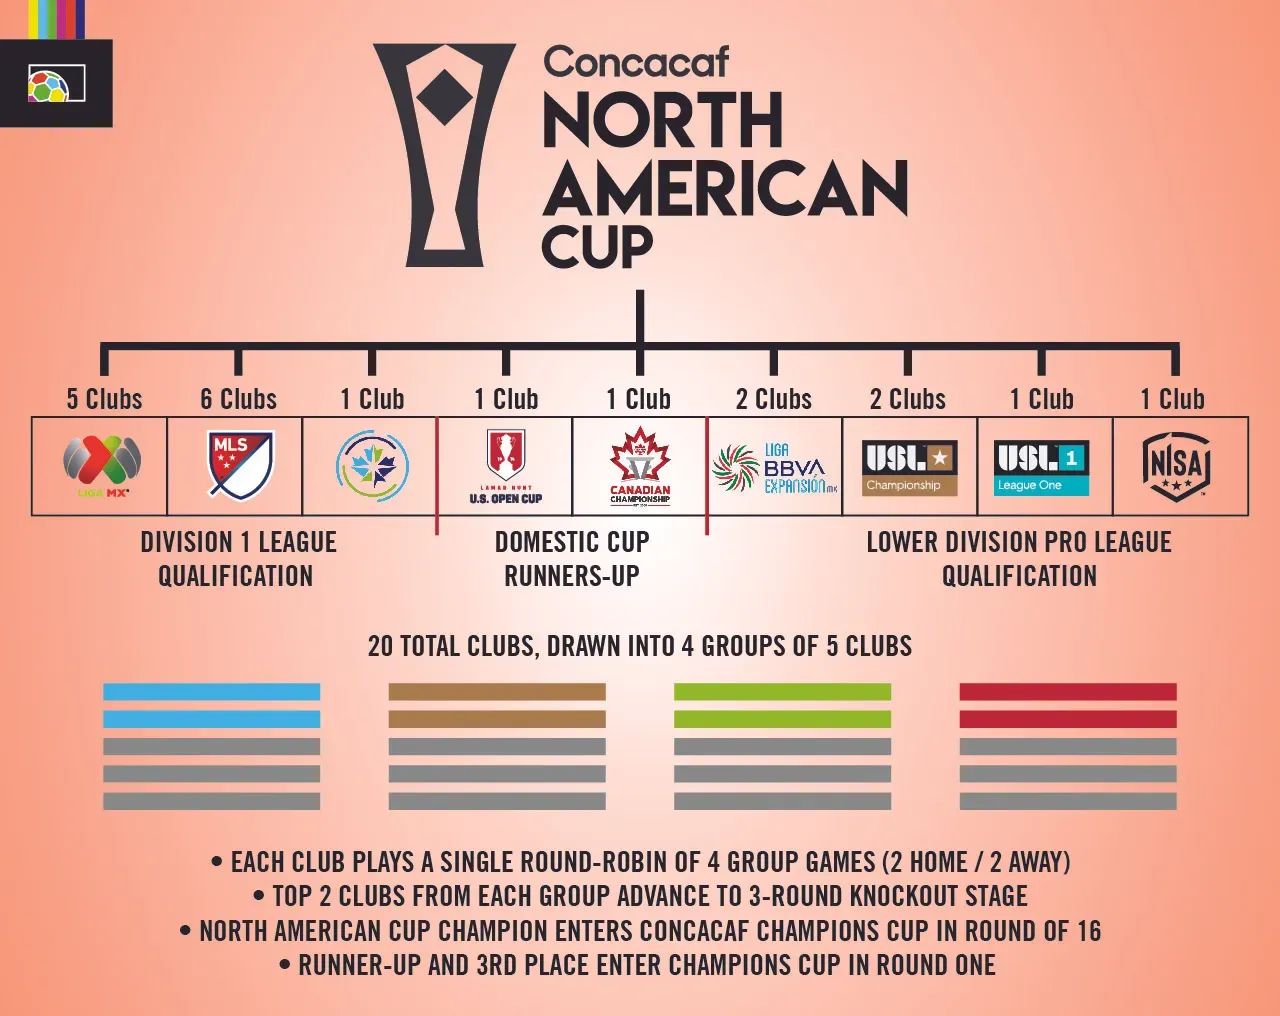 CONCACAF North American Cup